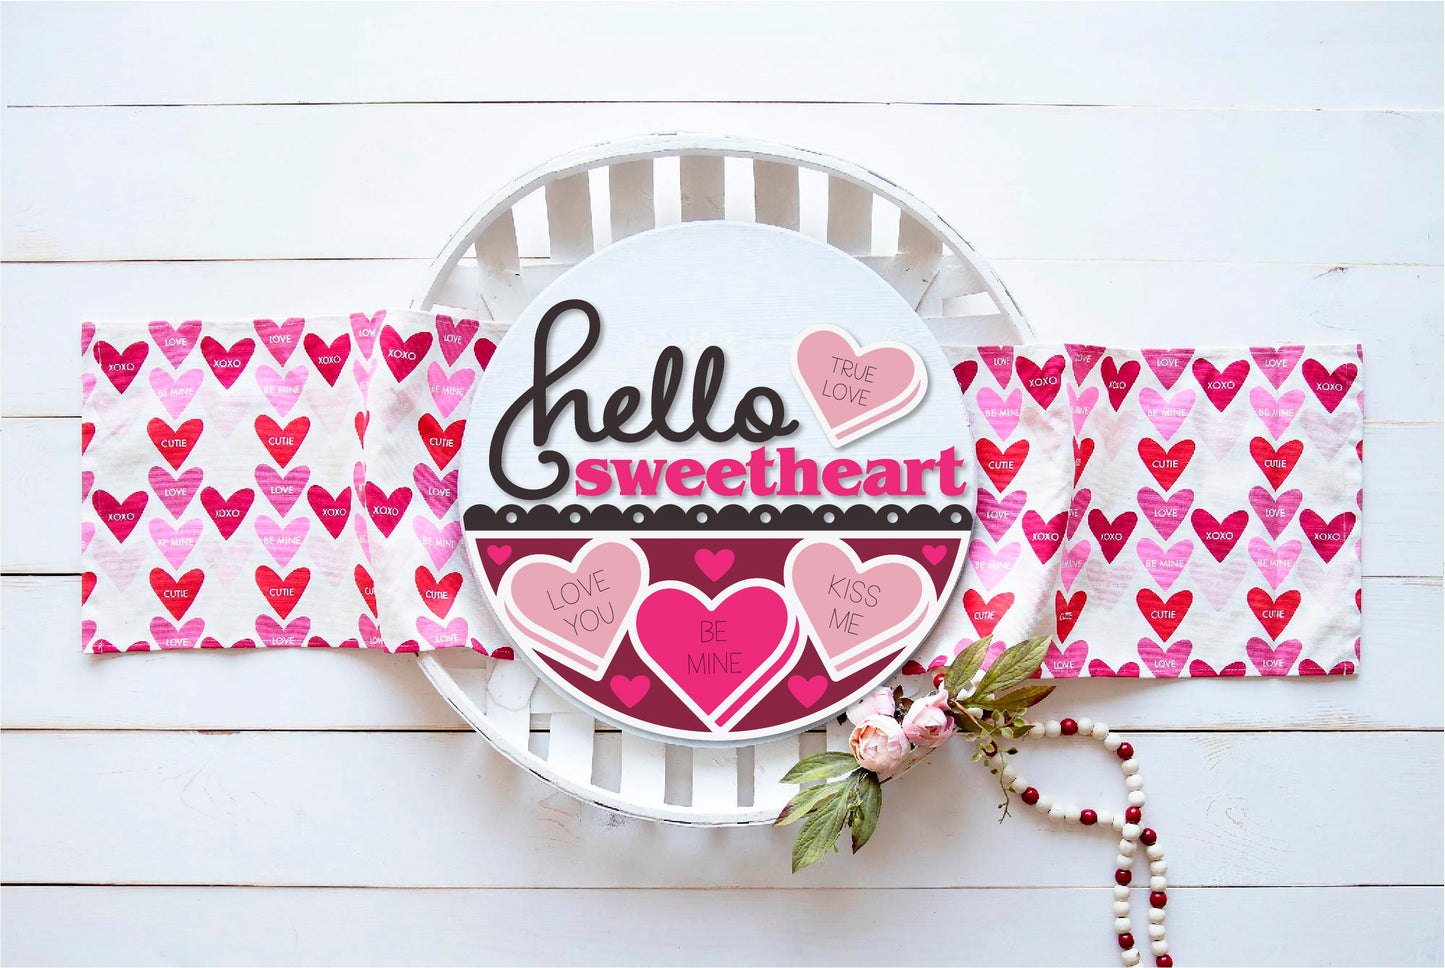 Hello sweetheart conversation heart sign